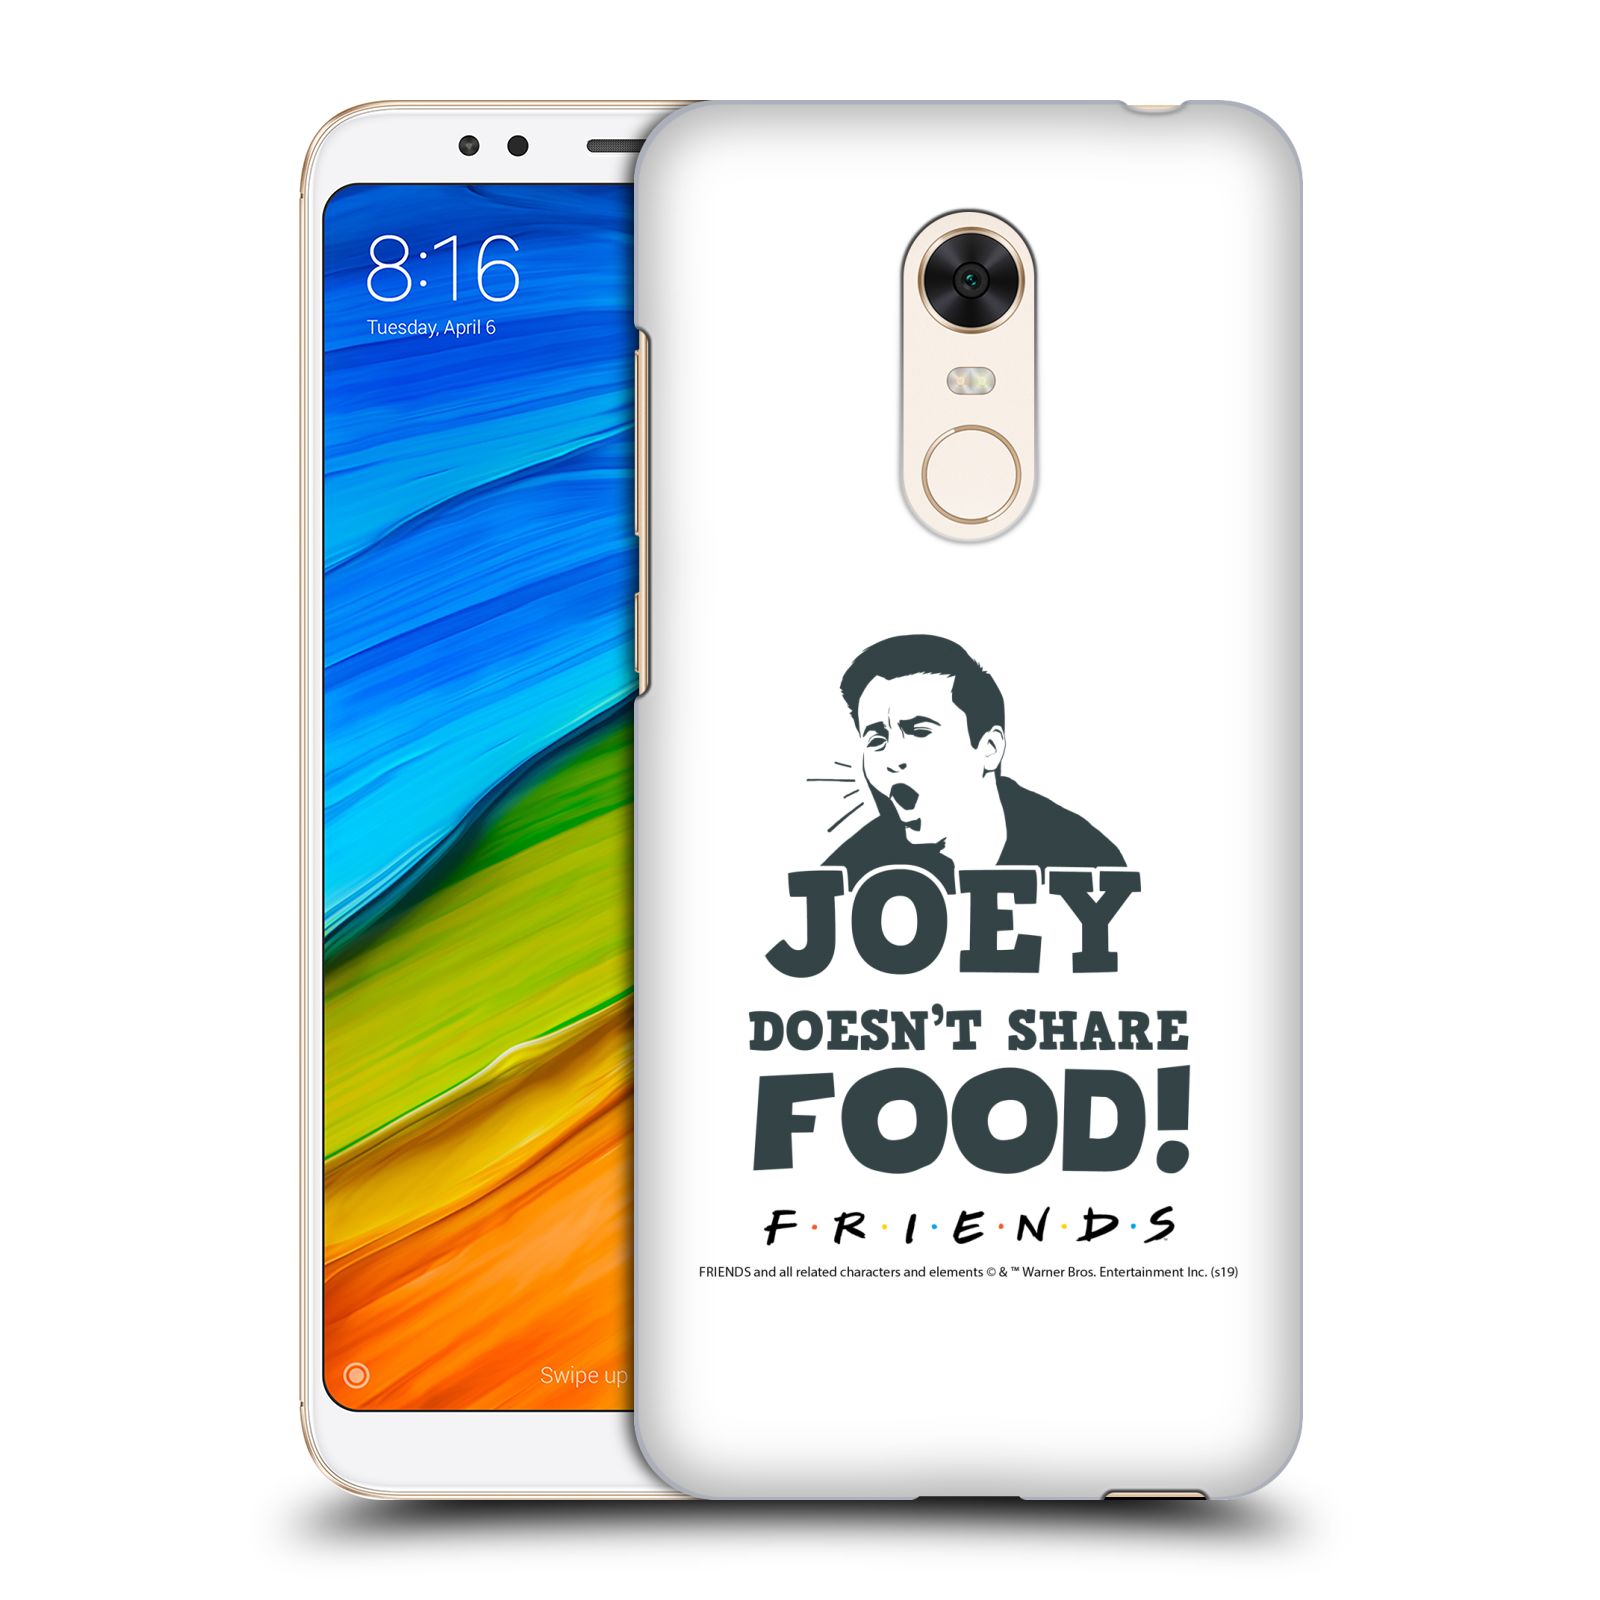 Pouzdro na mobil Xiaomi Redmi 5 PLUS (REDMI 5+) - HEAD CASE - Seriál Přátelé - Joey se o jídlo nedělí